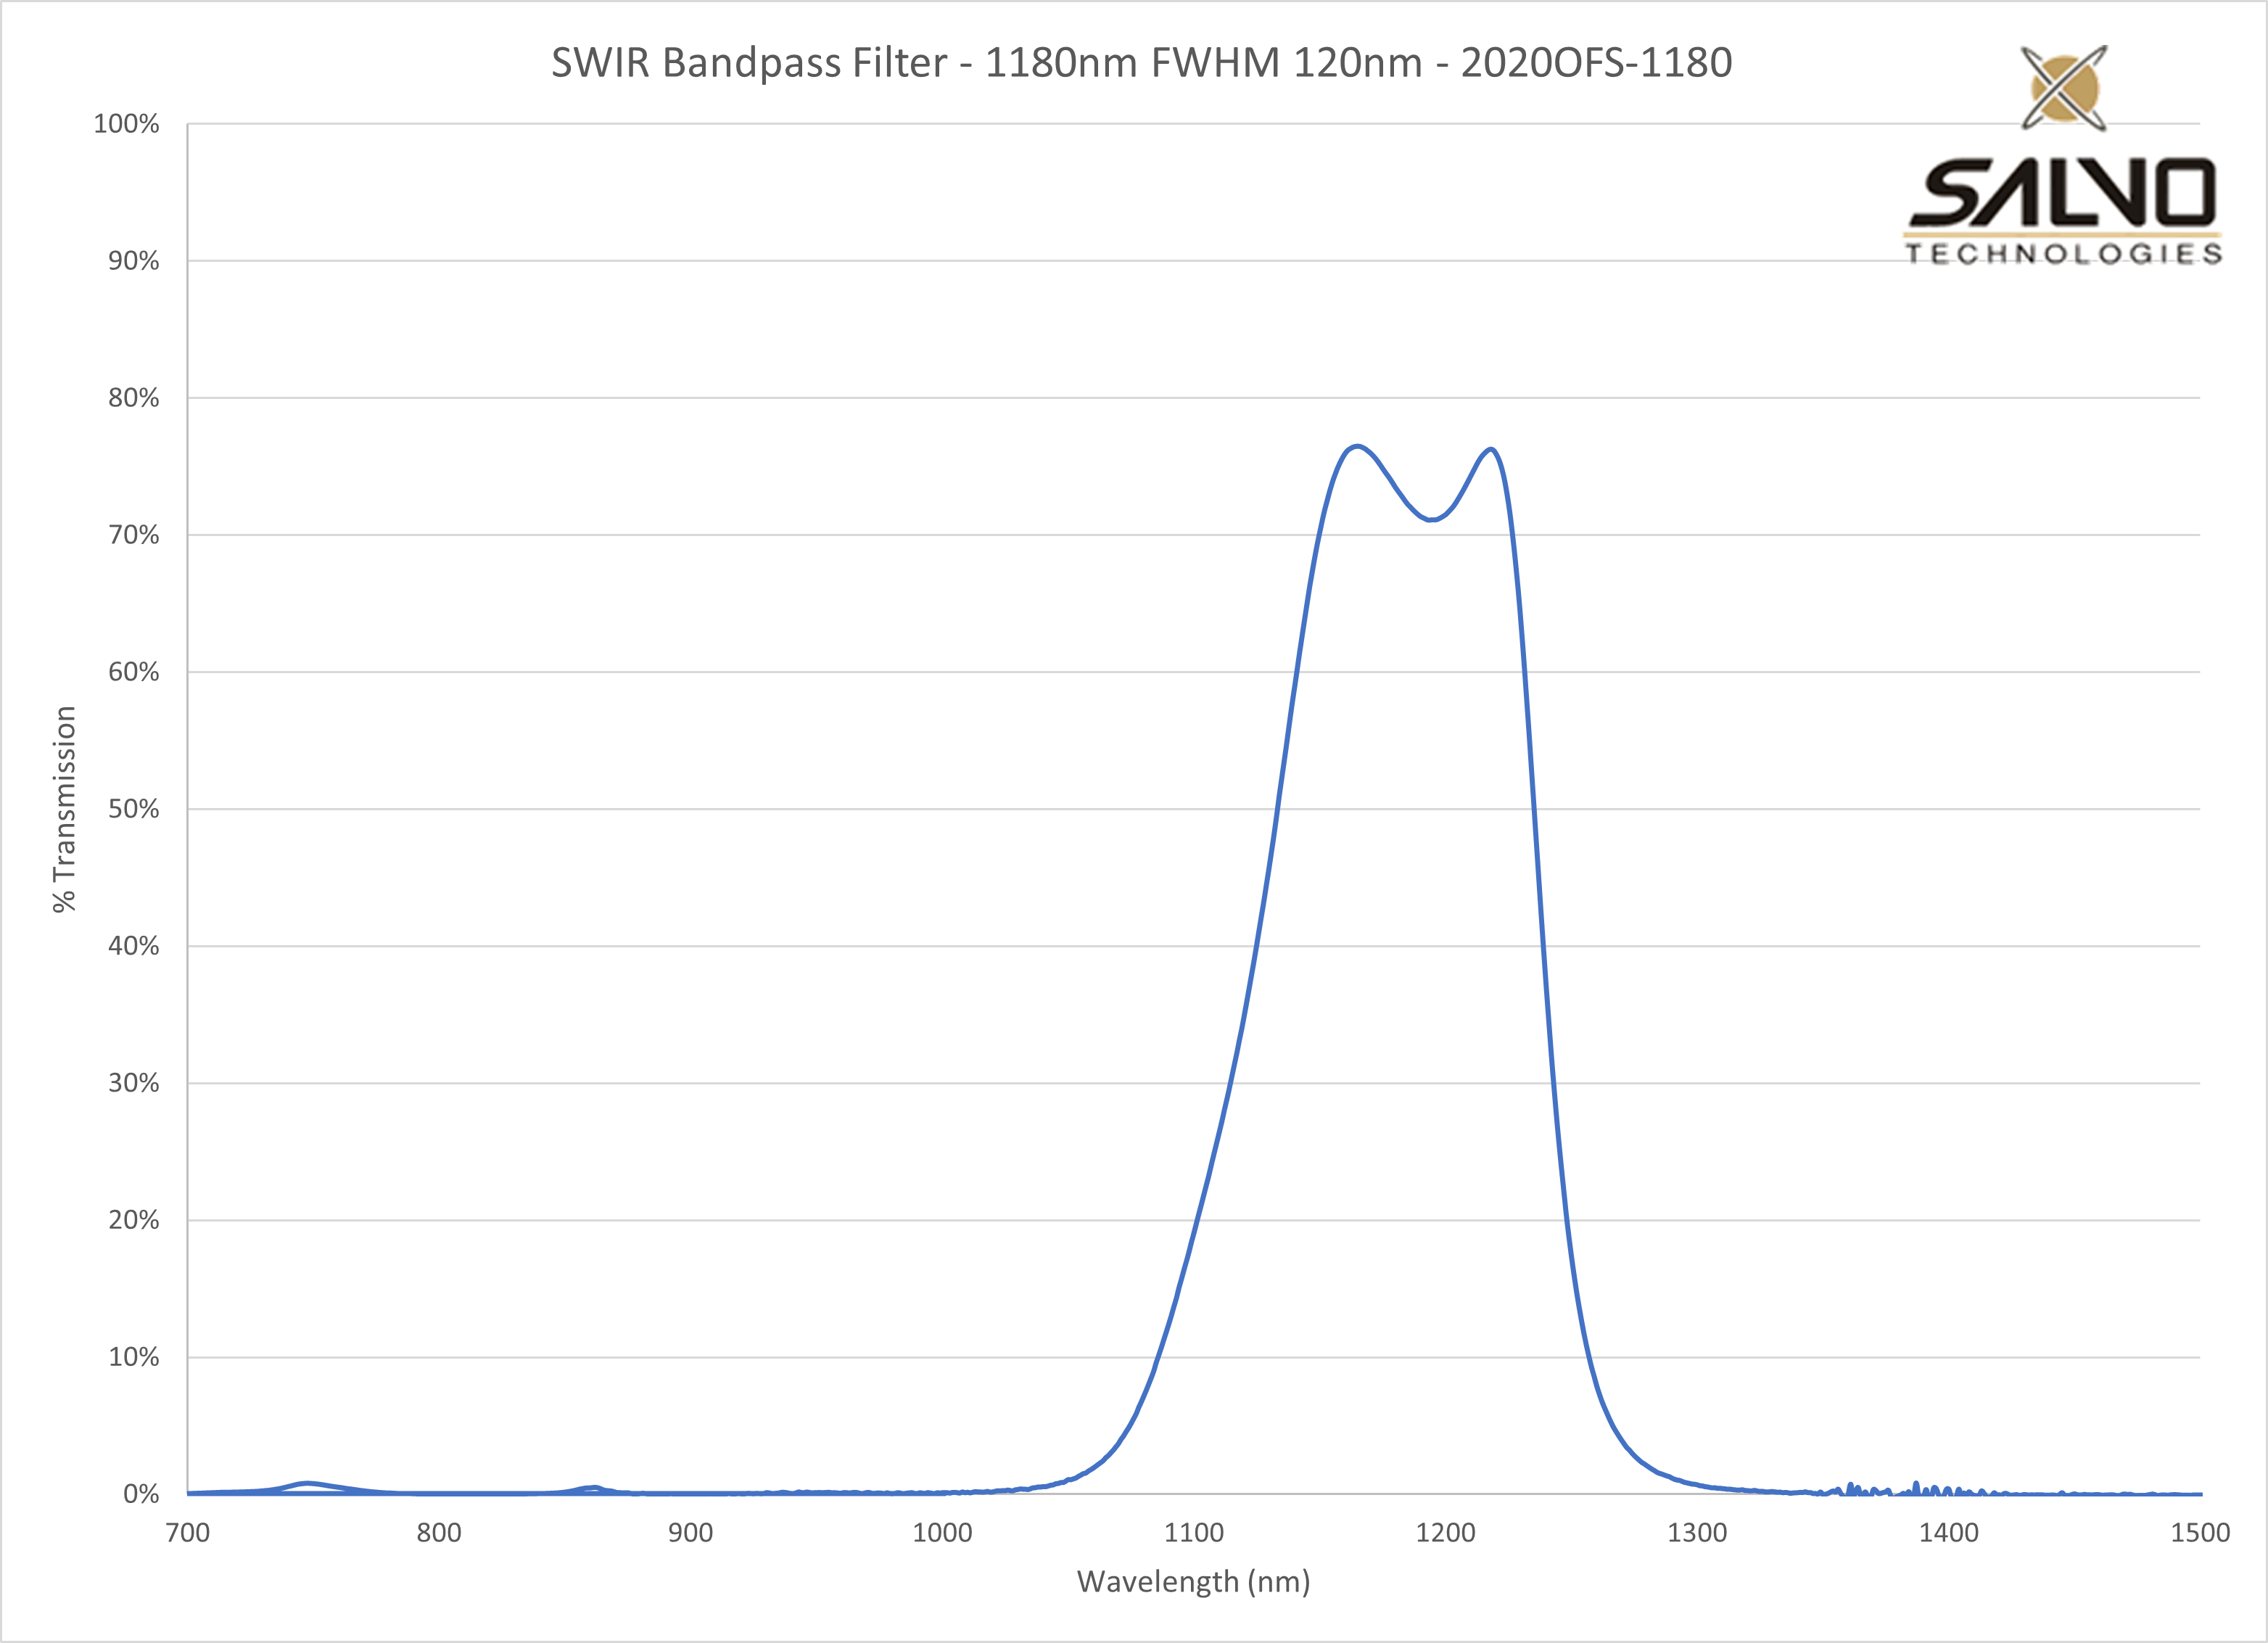 SWIR Bandpass Filter - 1180nm FWHM 120nm - 2020OFS-1180